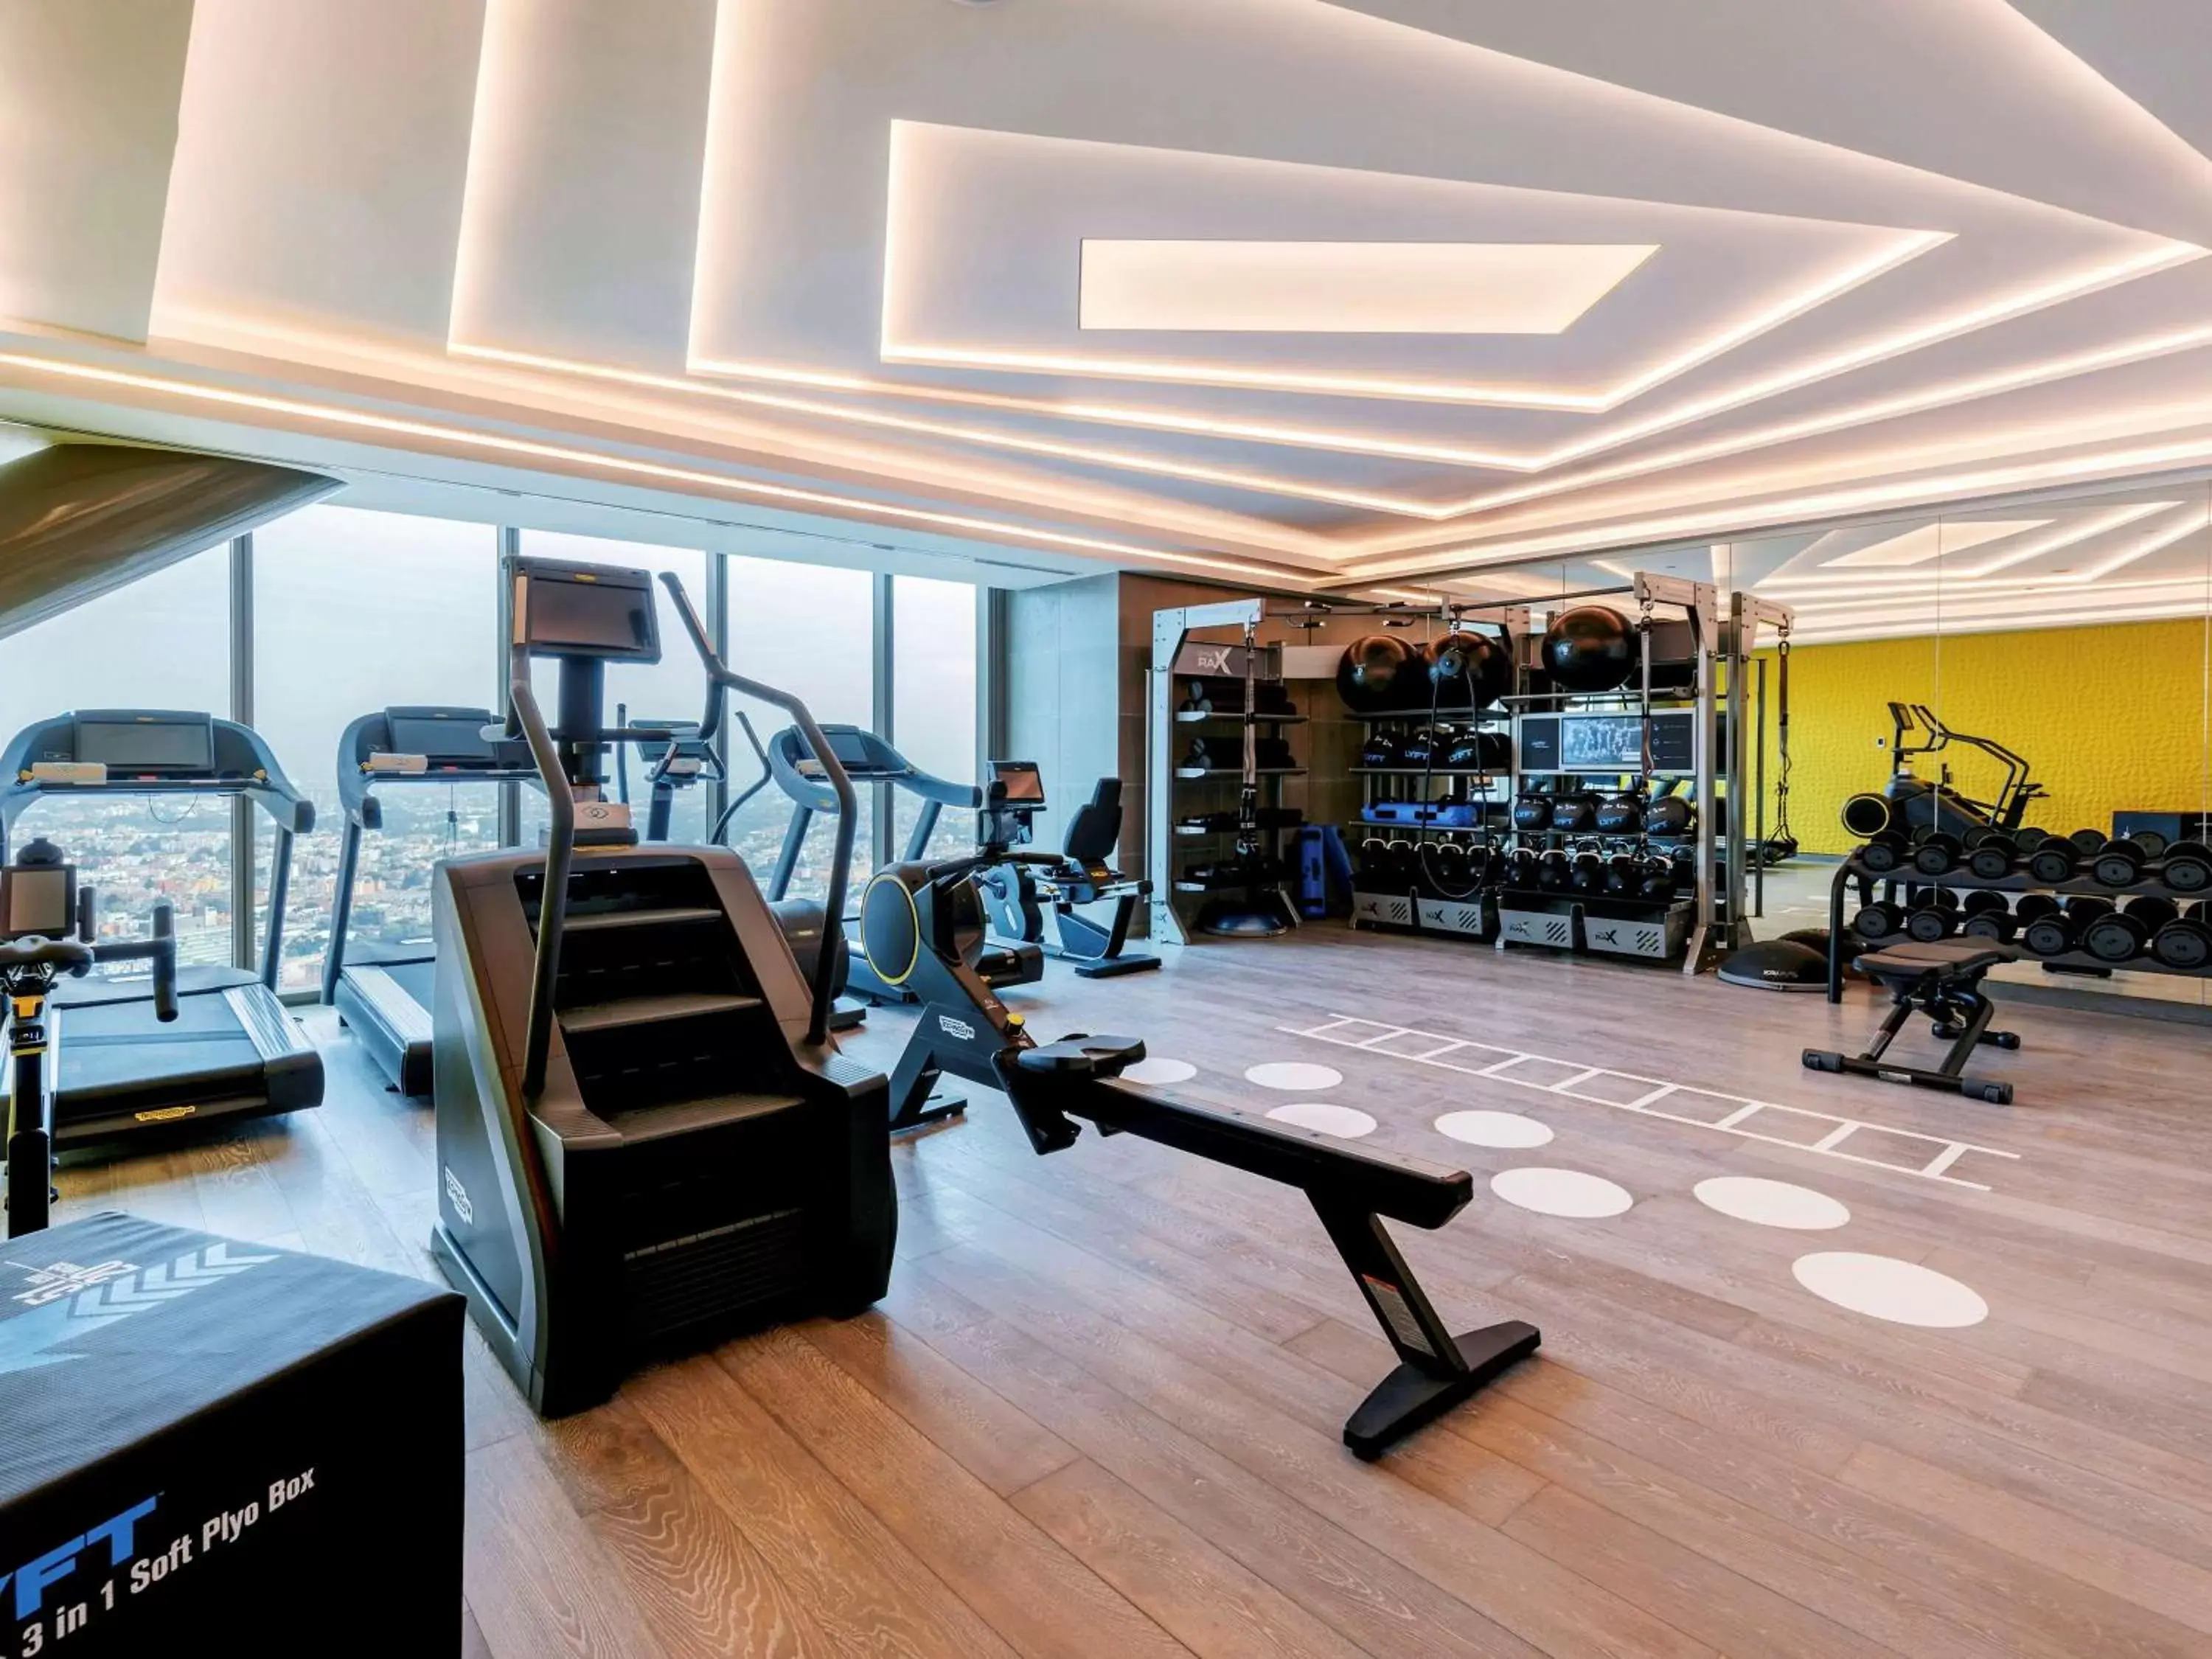 Fitness centre/facilities, Fitness Center/Facilities in Sofitel Mexico City Reforma